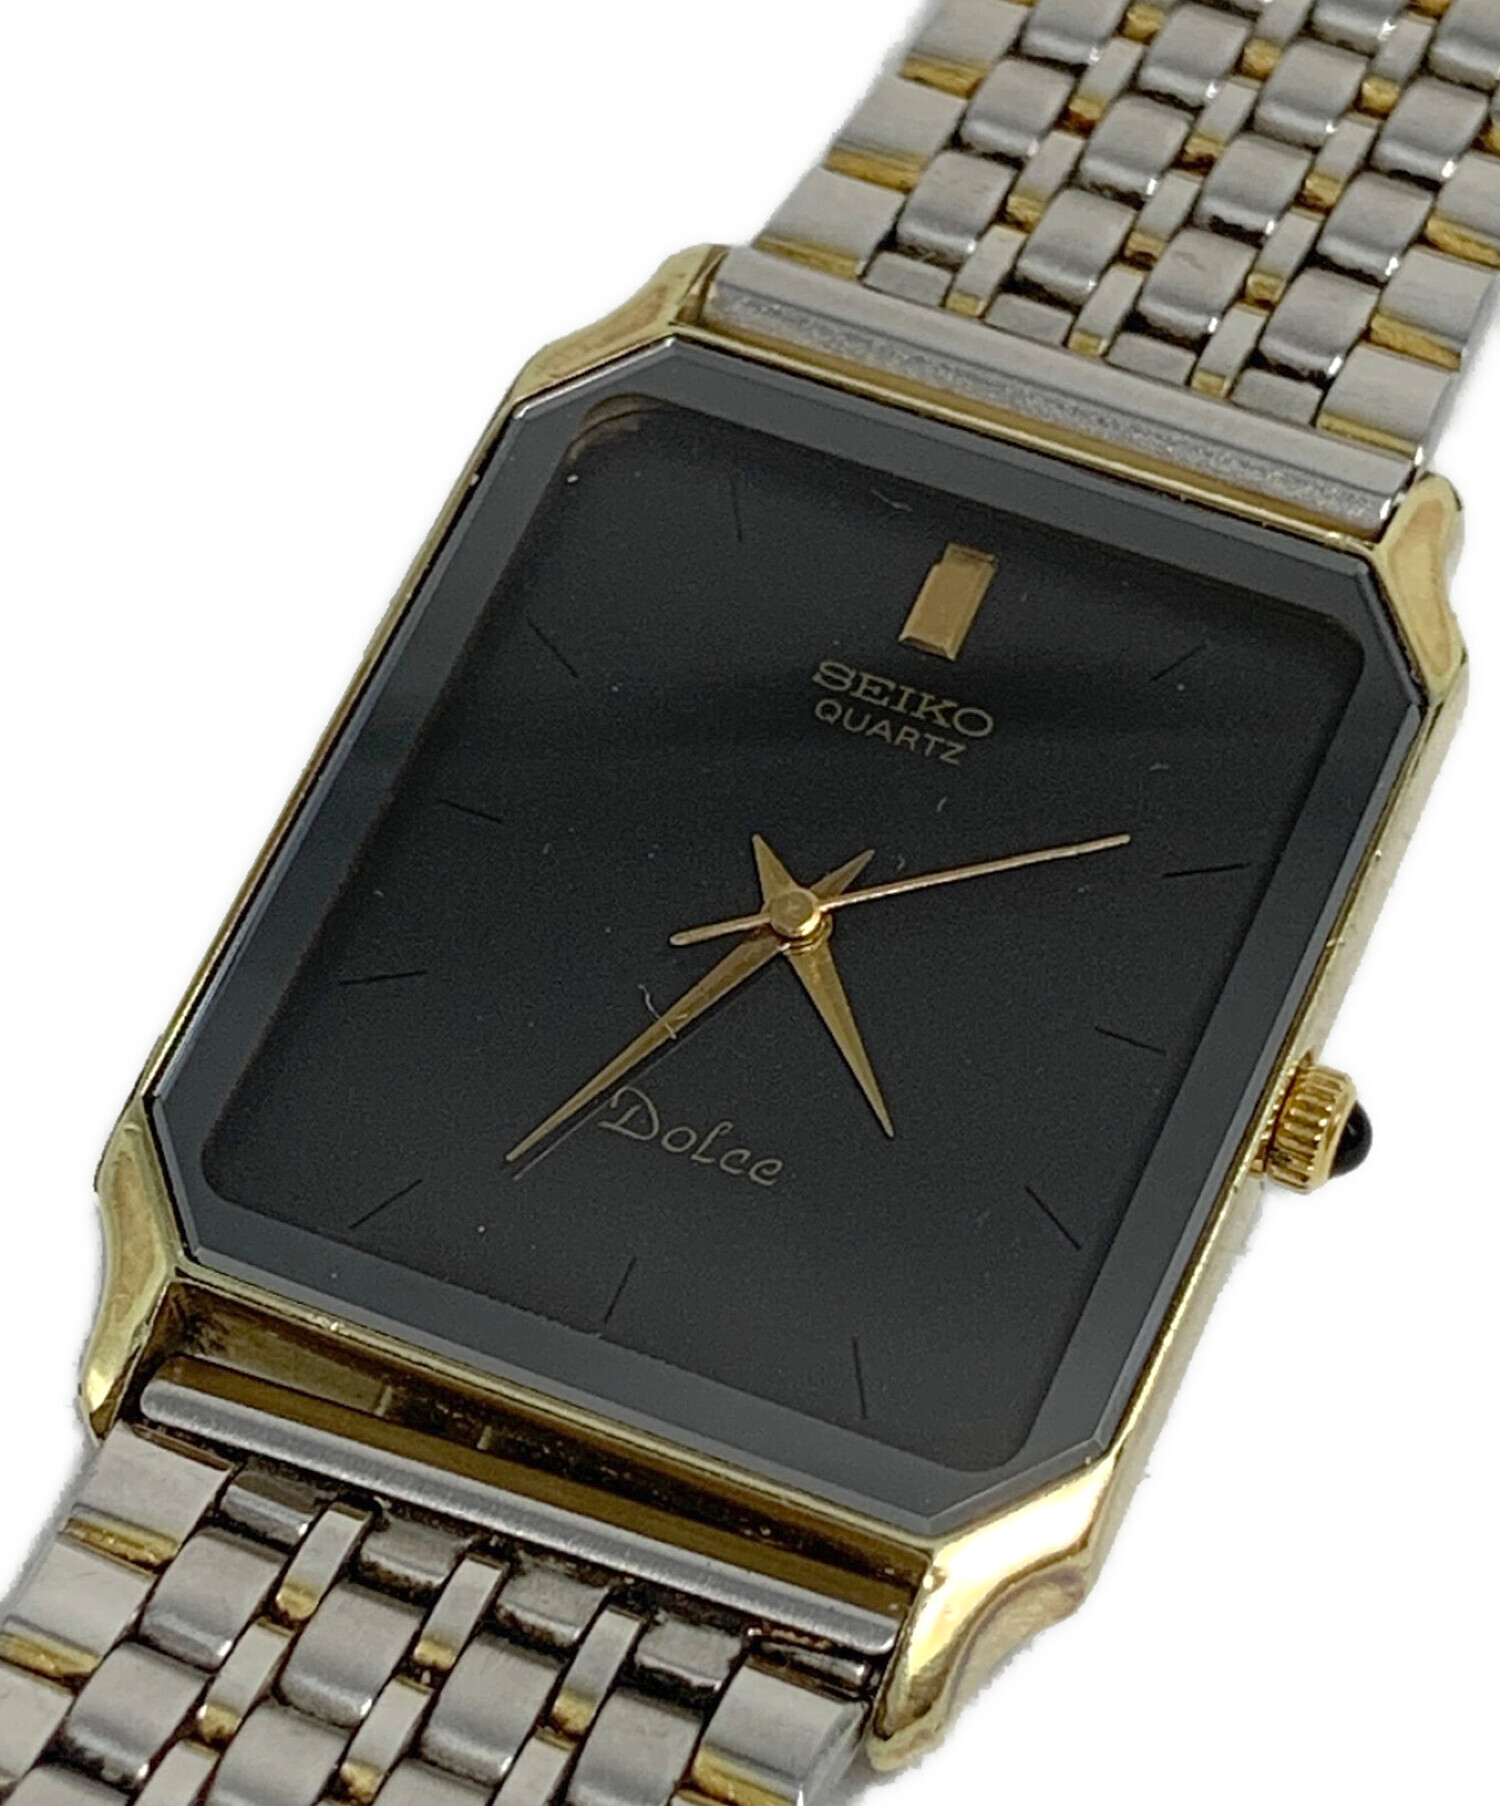 SEIKO (セイコー) SEIKO腕時計ドルチェ7731-5220